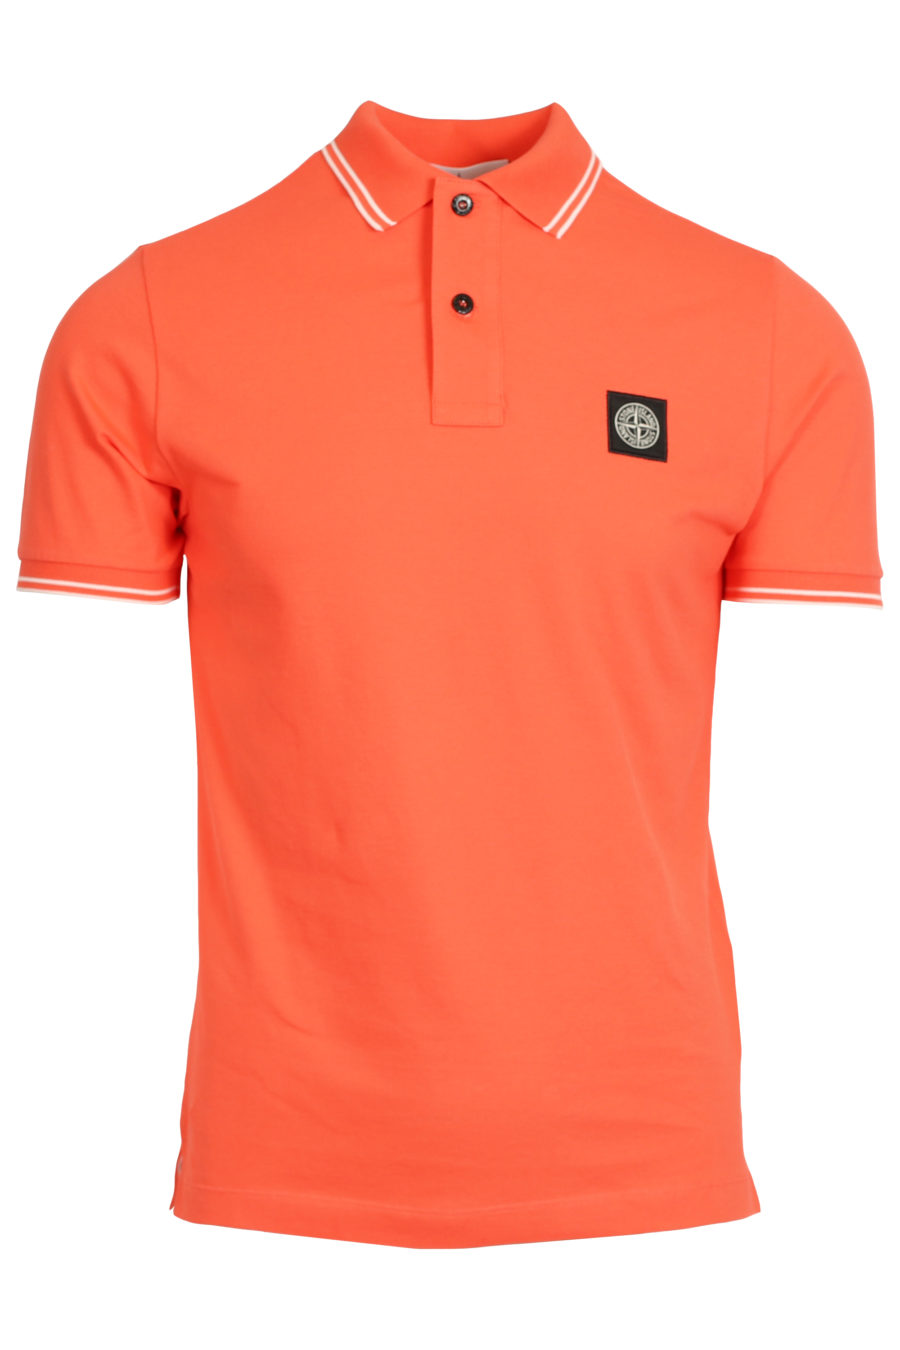 Polo orange Fluor avec logo - IMG 3669